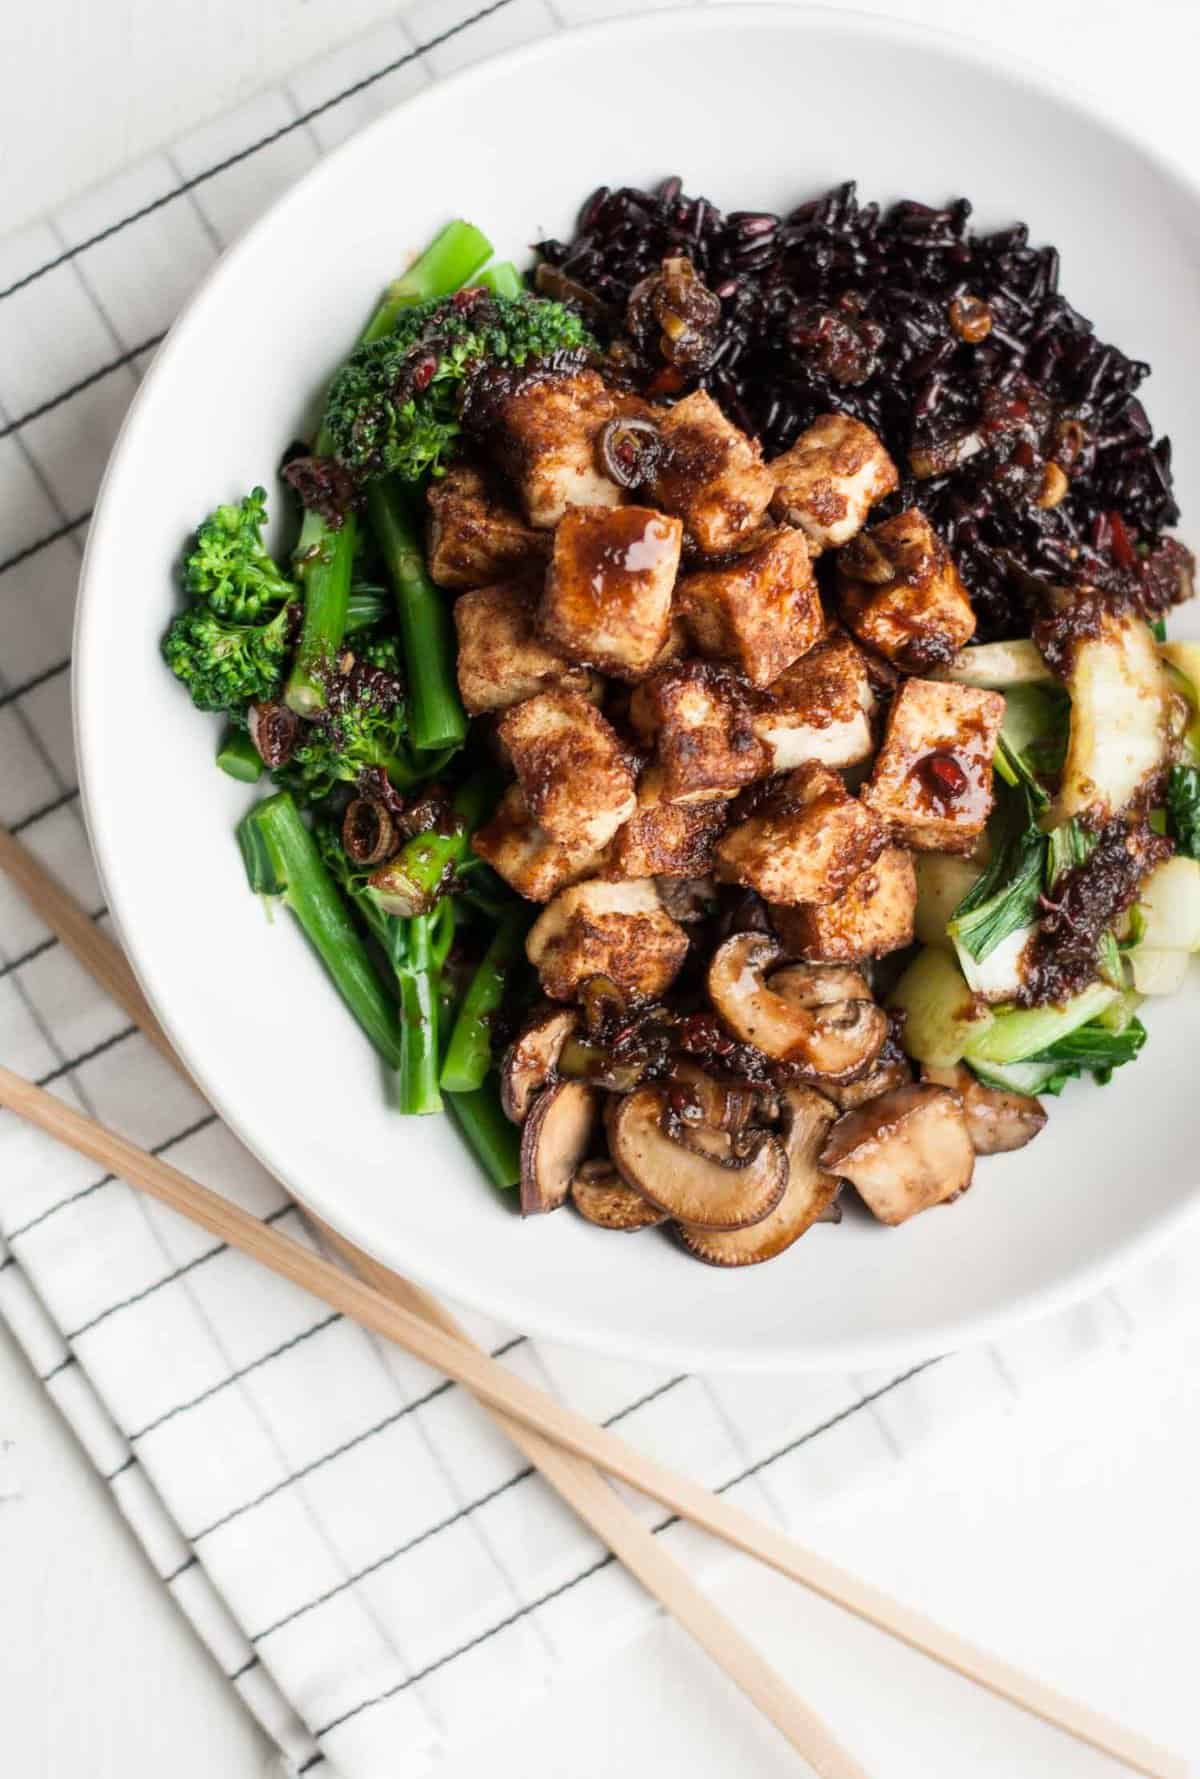 A plate of crispy tofu with broccoli, black rice and mushrooms.